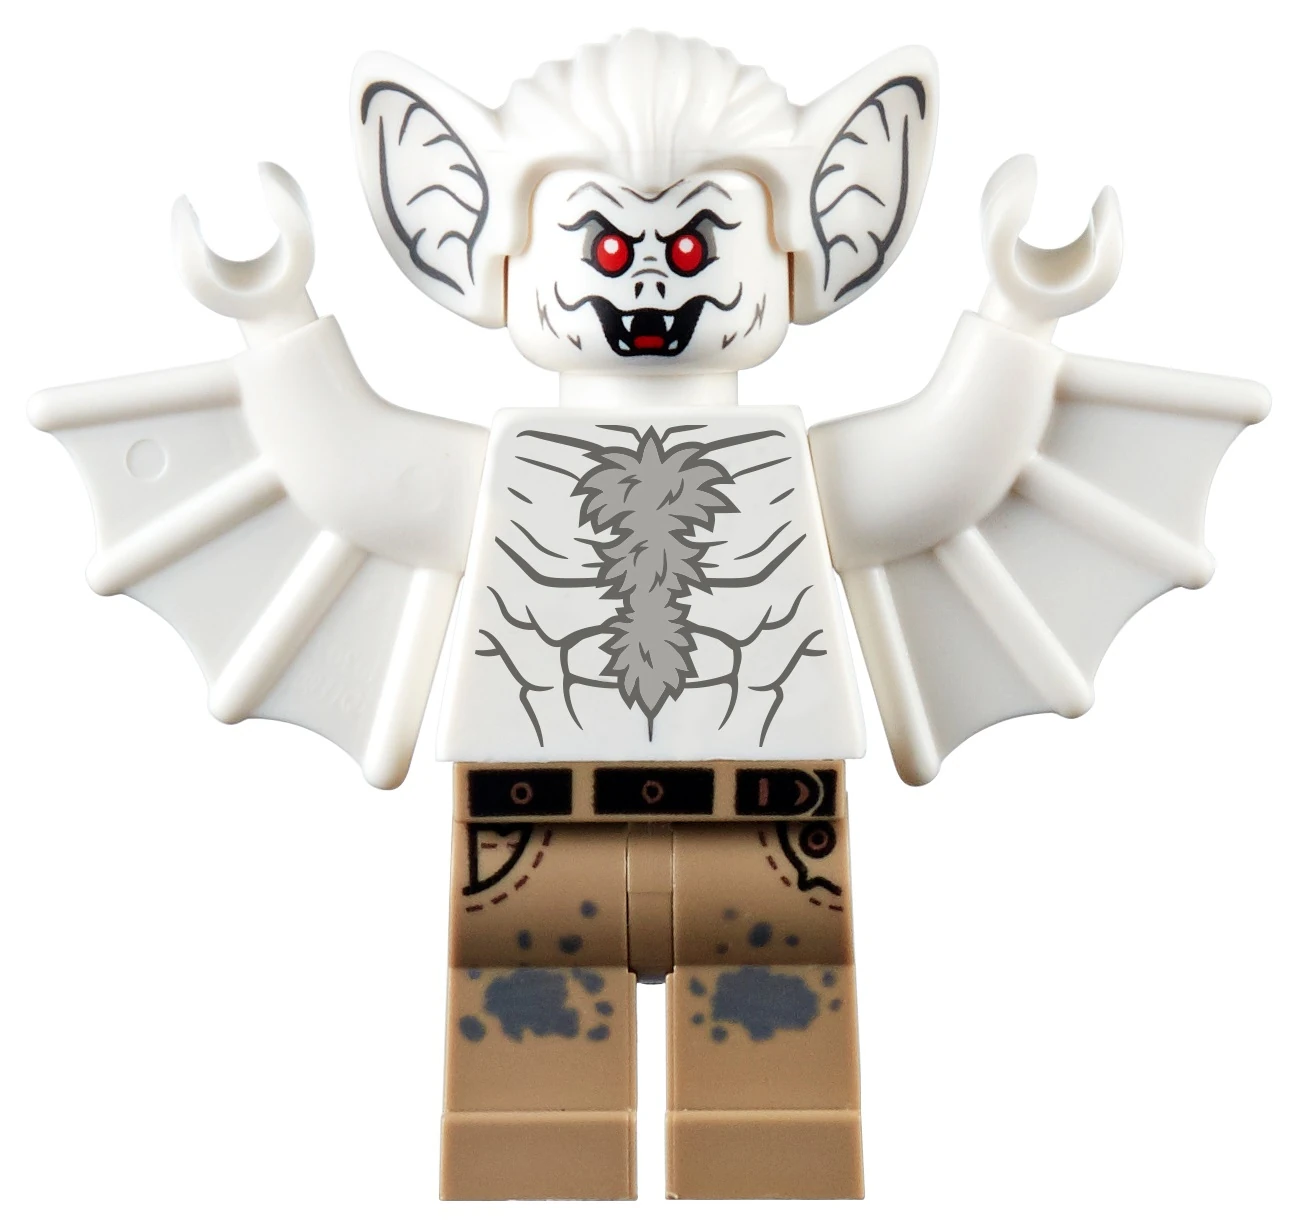 LEGO DC Super Heroes Man-Bat minifigure